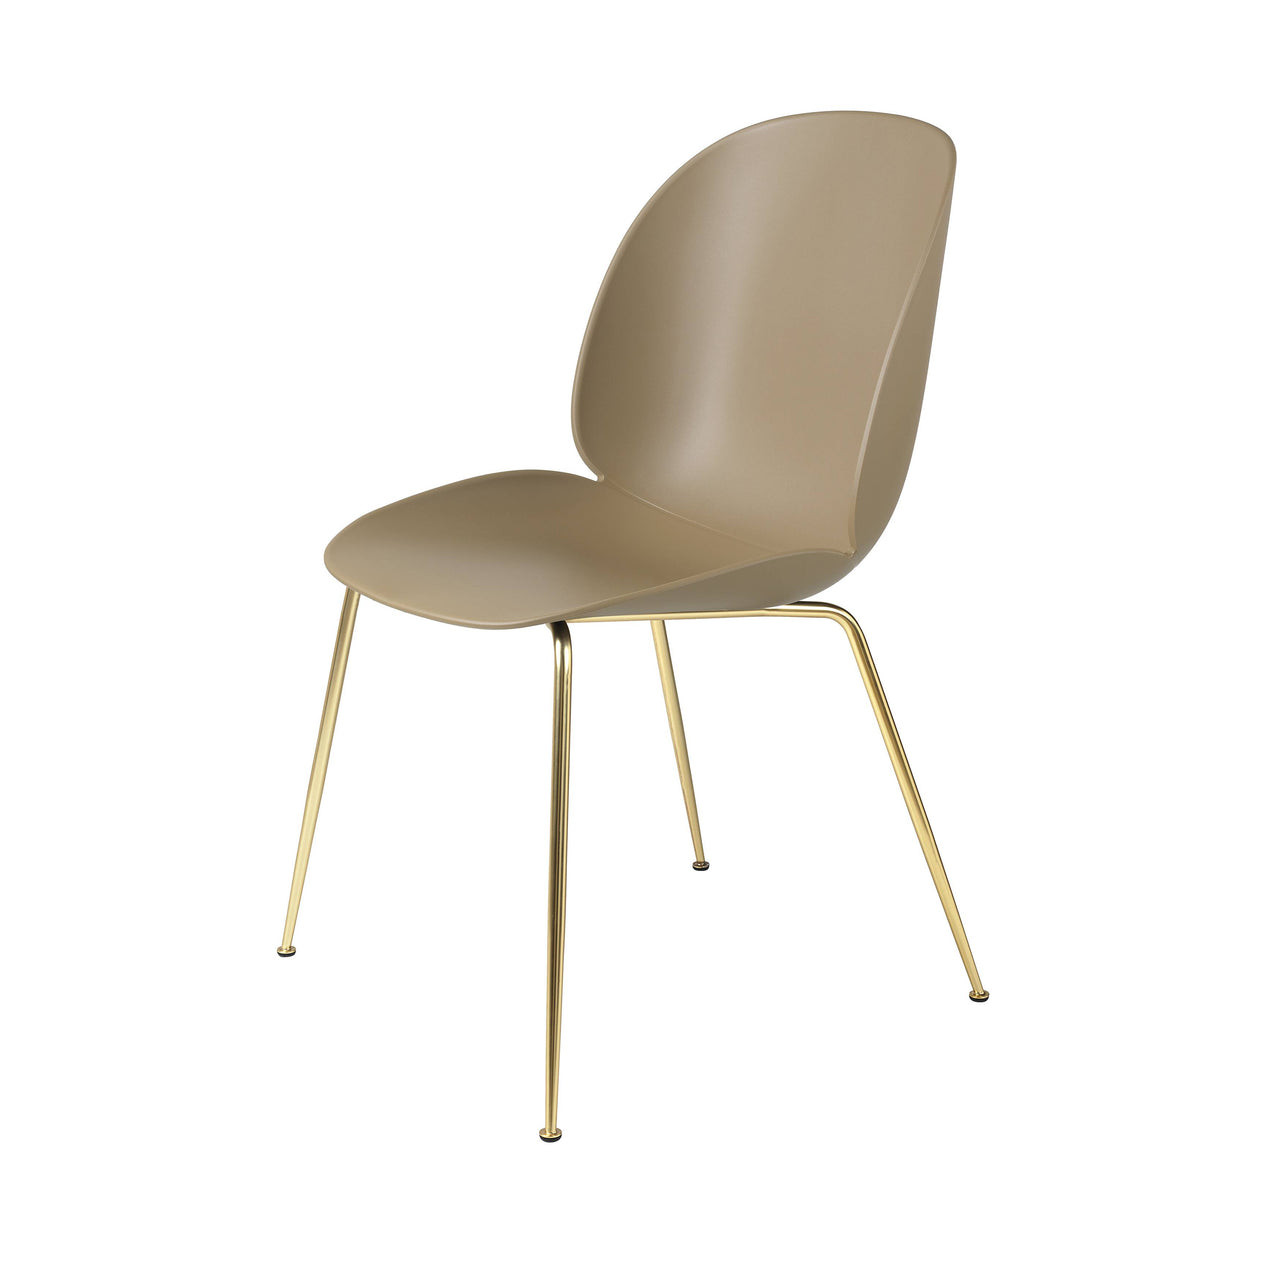 Beetle Dining Chair: Conic Base + Pebble Brown + Brass Semi Matt + Felt Glides